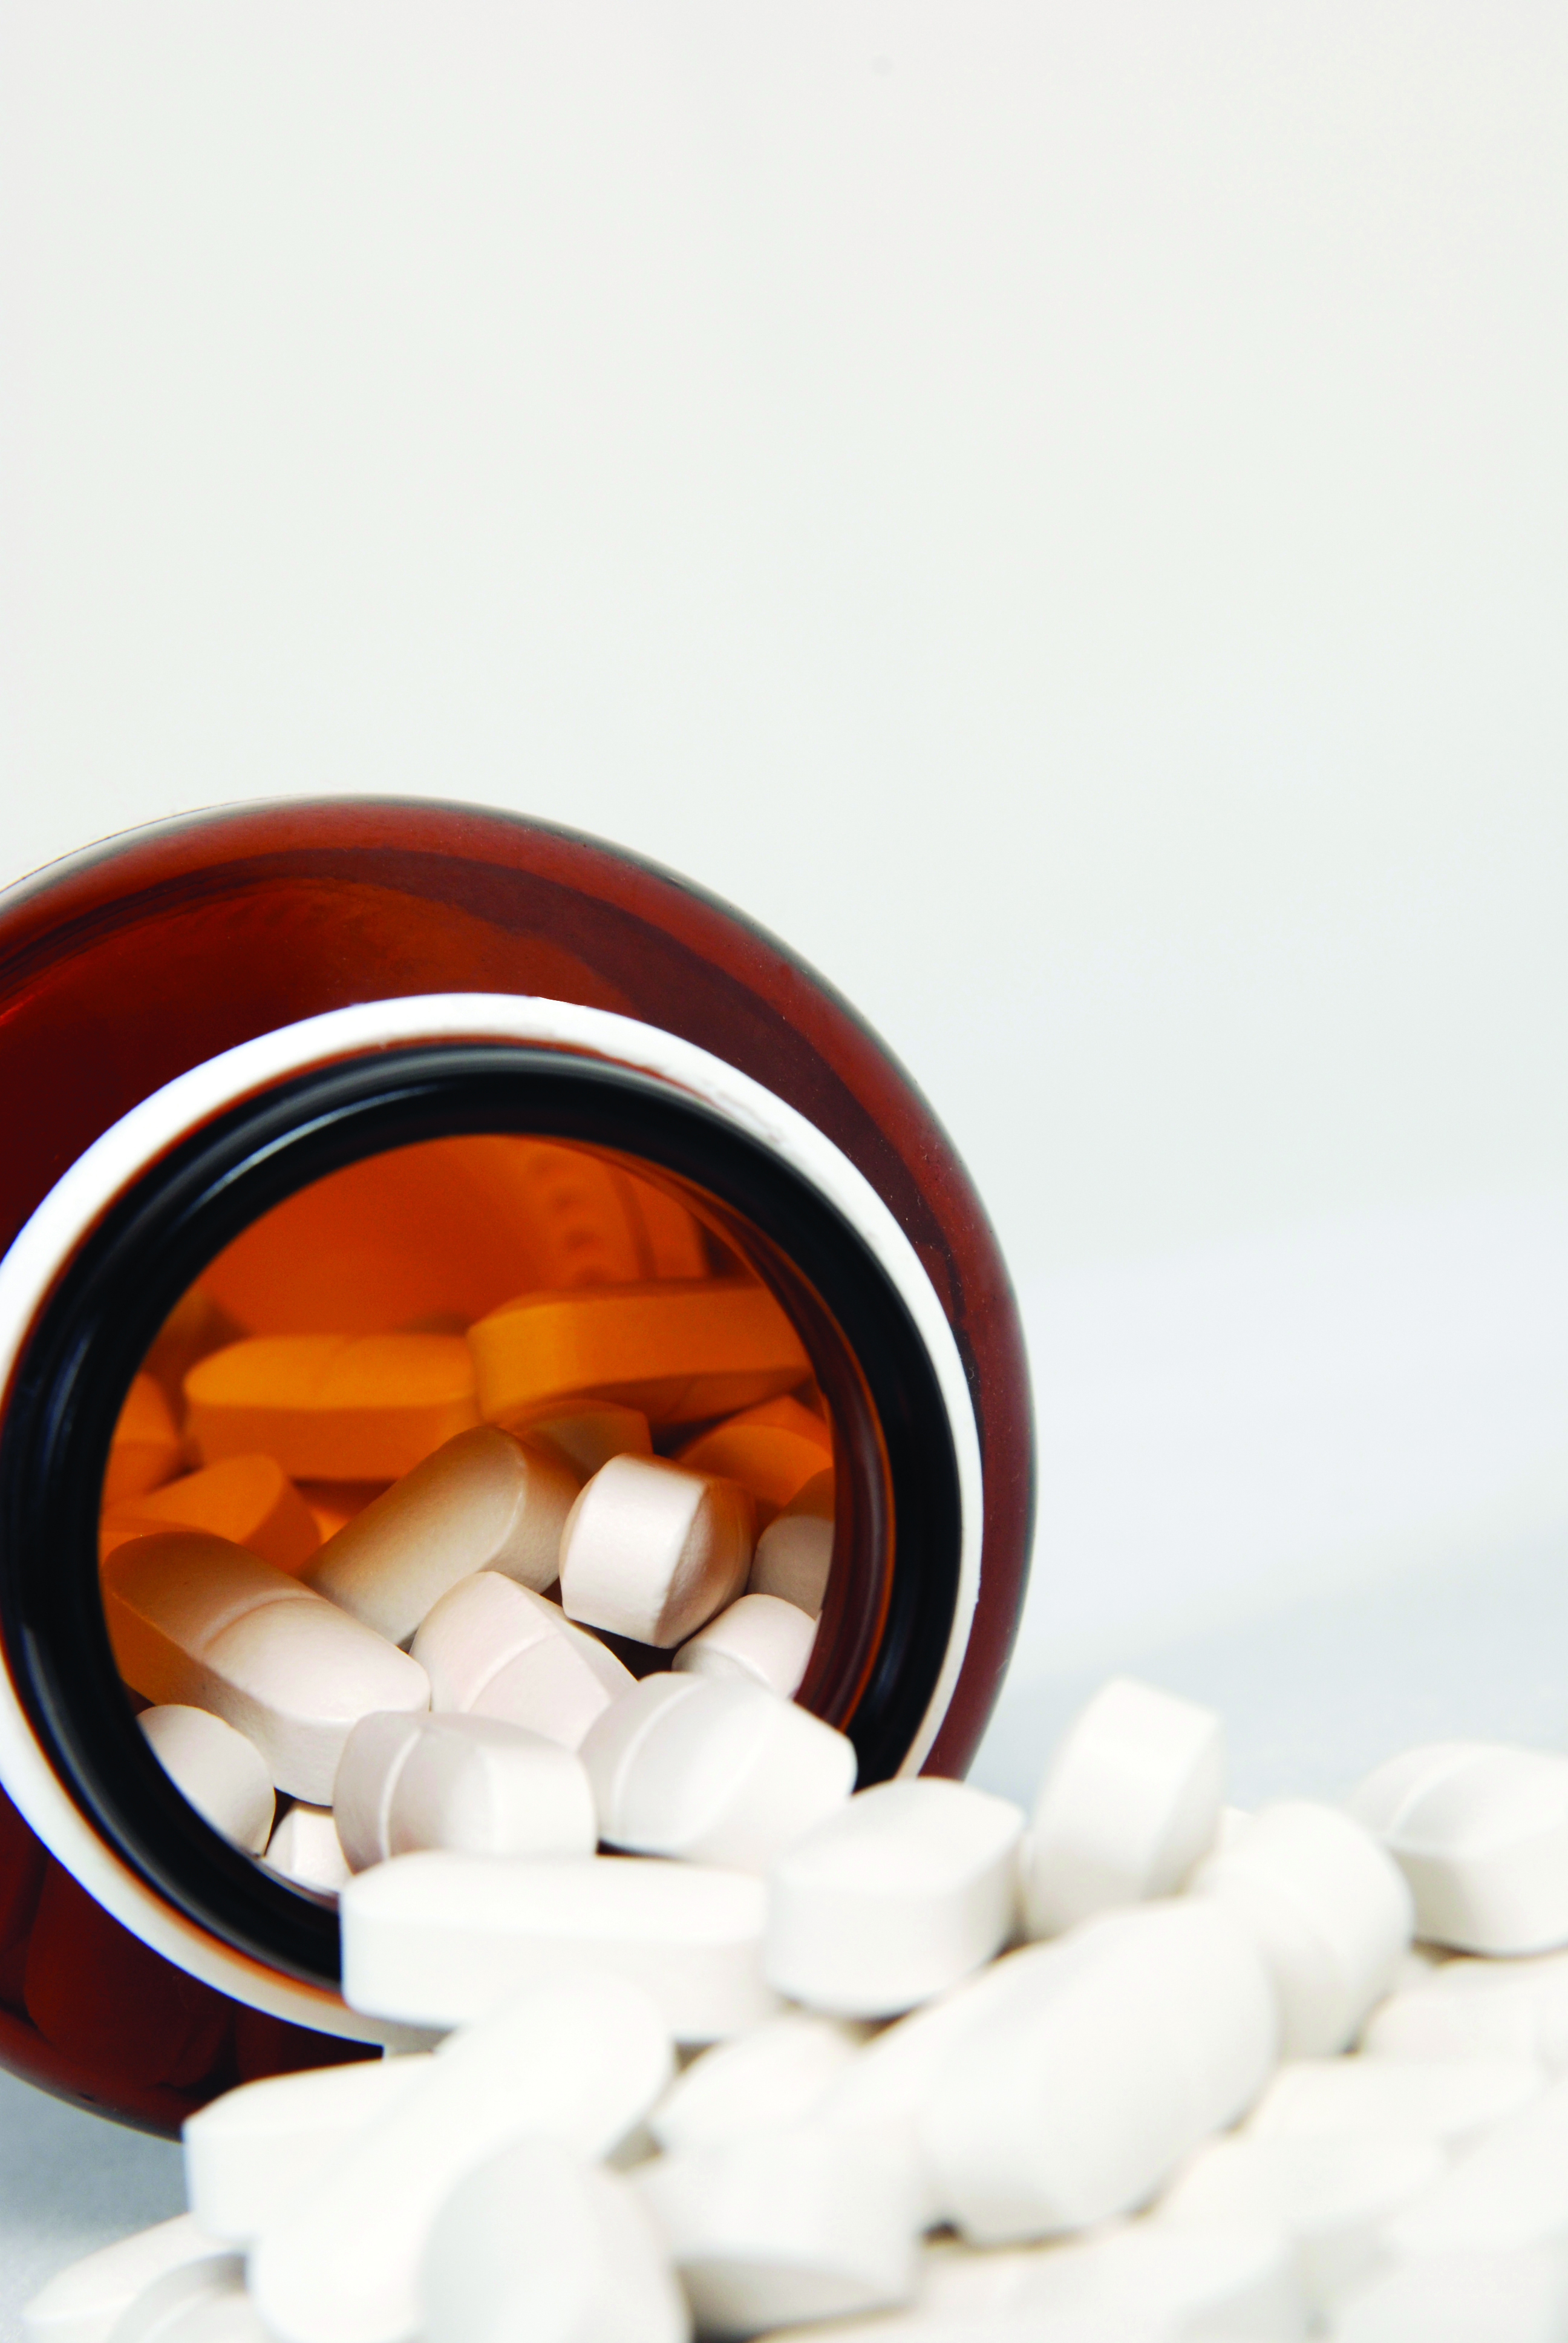 Medicine price cuts sees chemist shake up